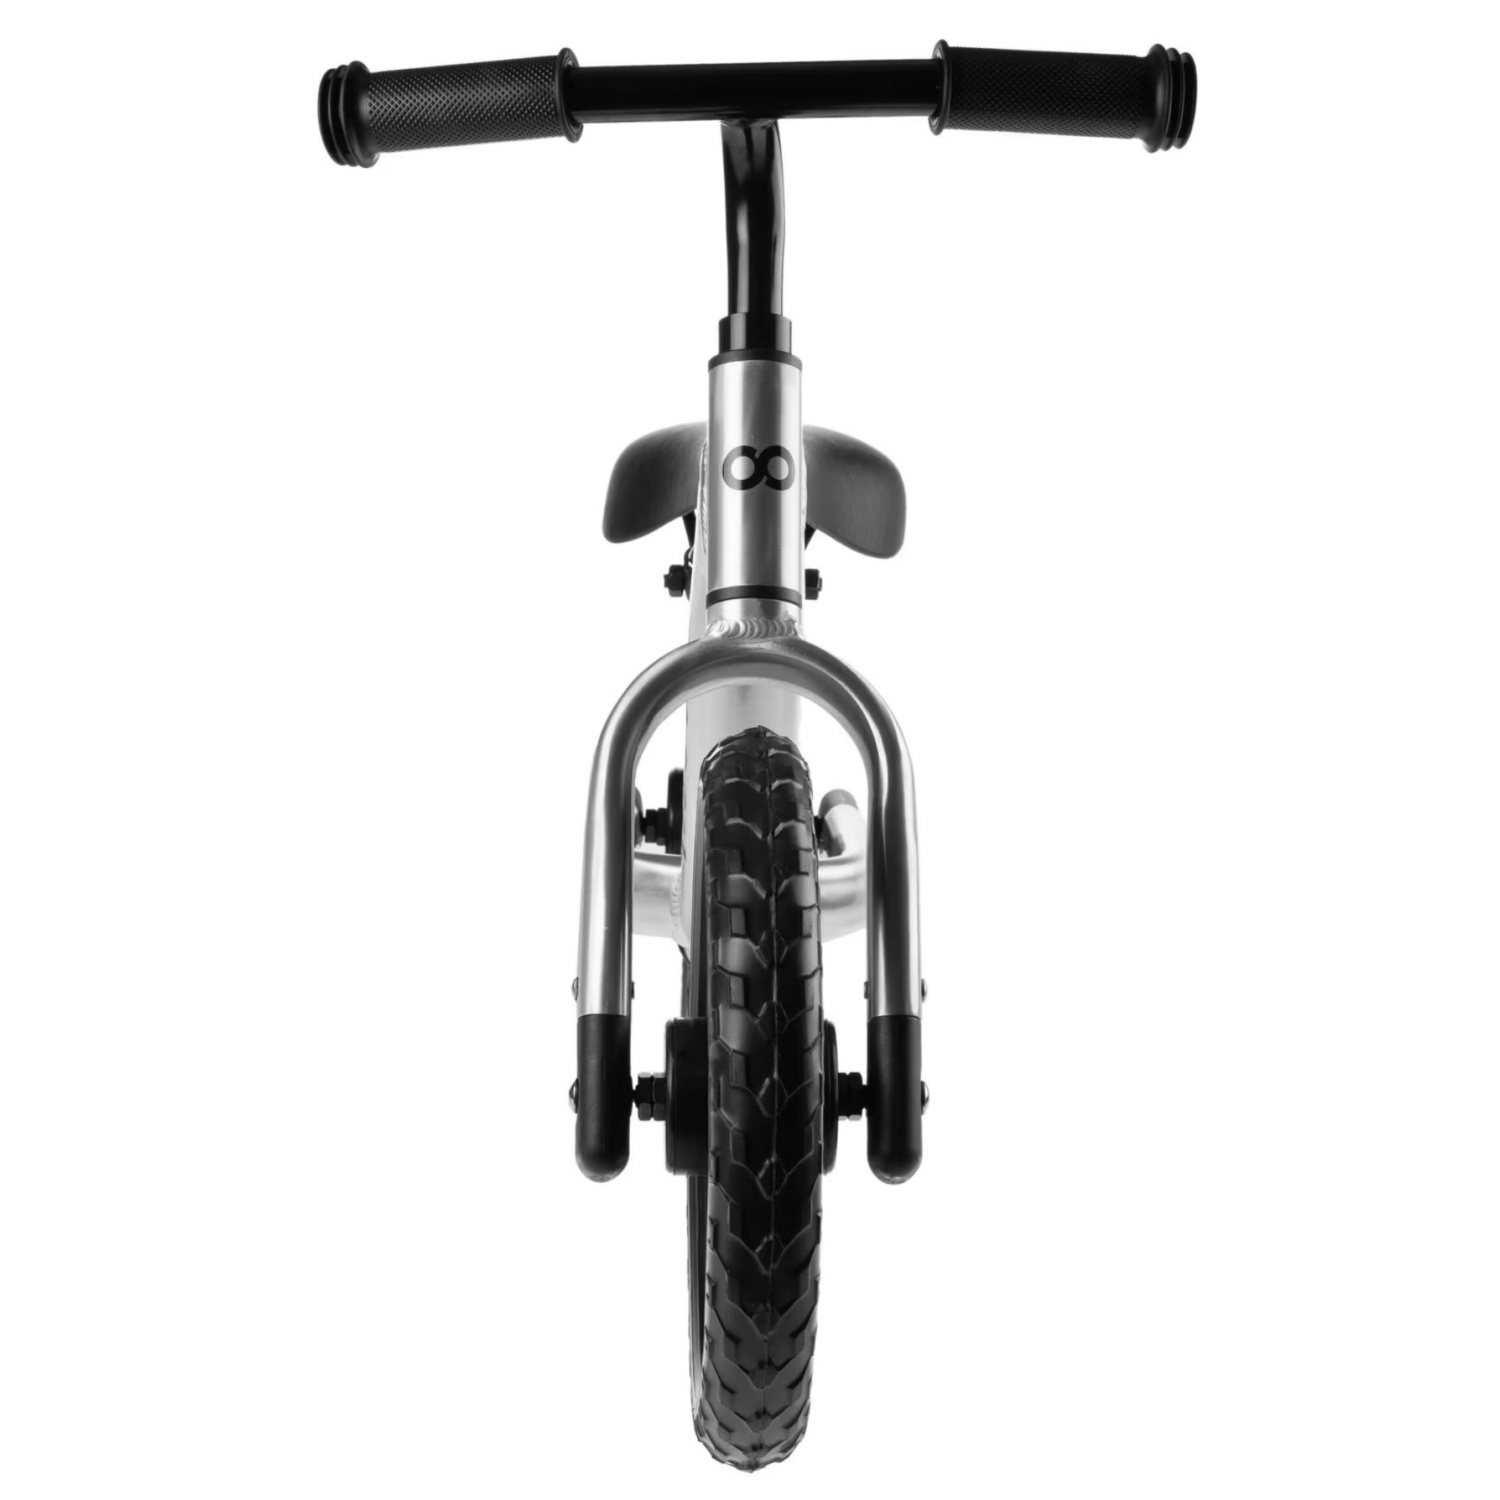 KOOR Balance bike ruuky uno, 12", alluminio